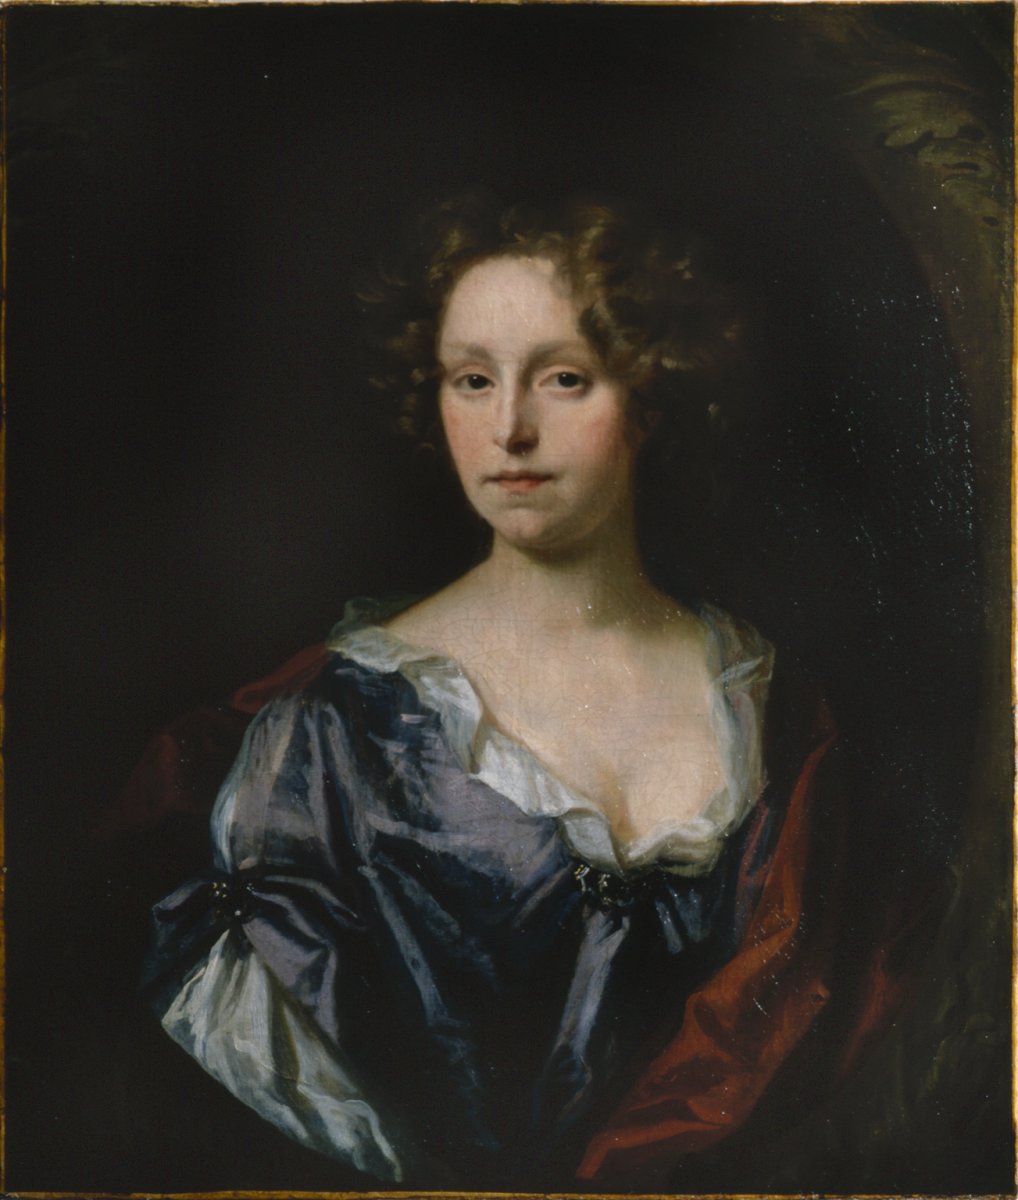 Image of Mrs Rider, Sister of John Smith, Speaker of the House of Commons